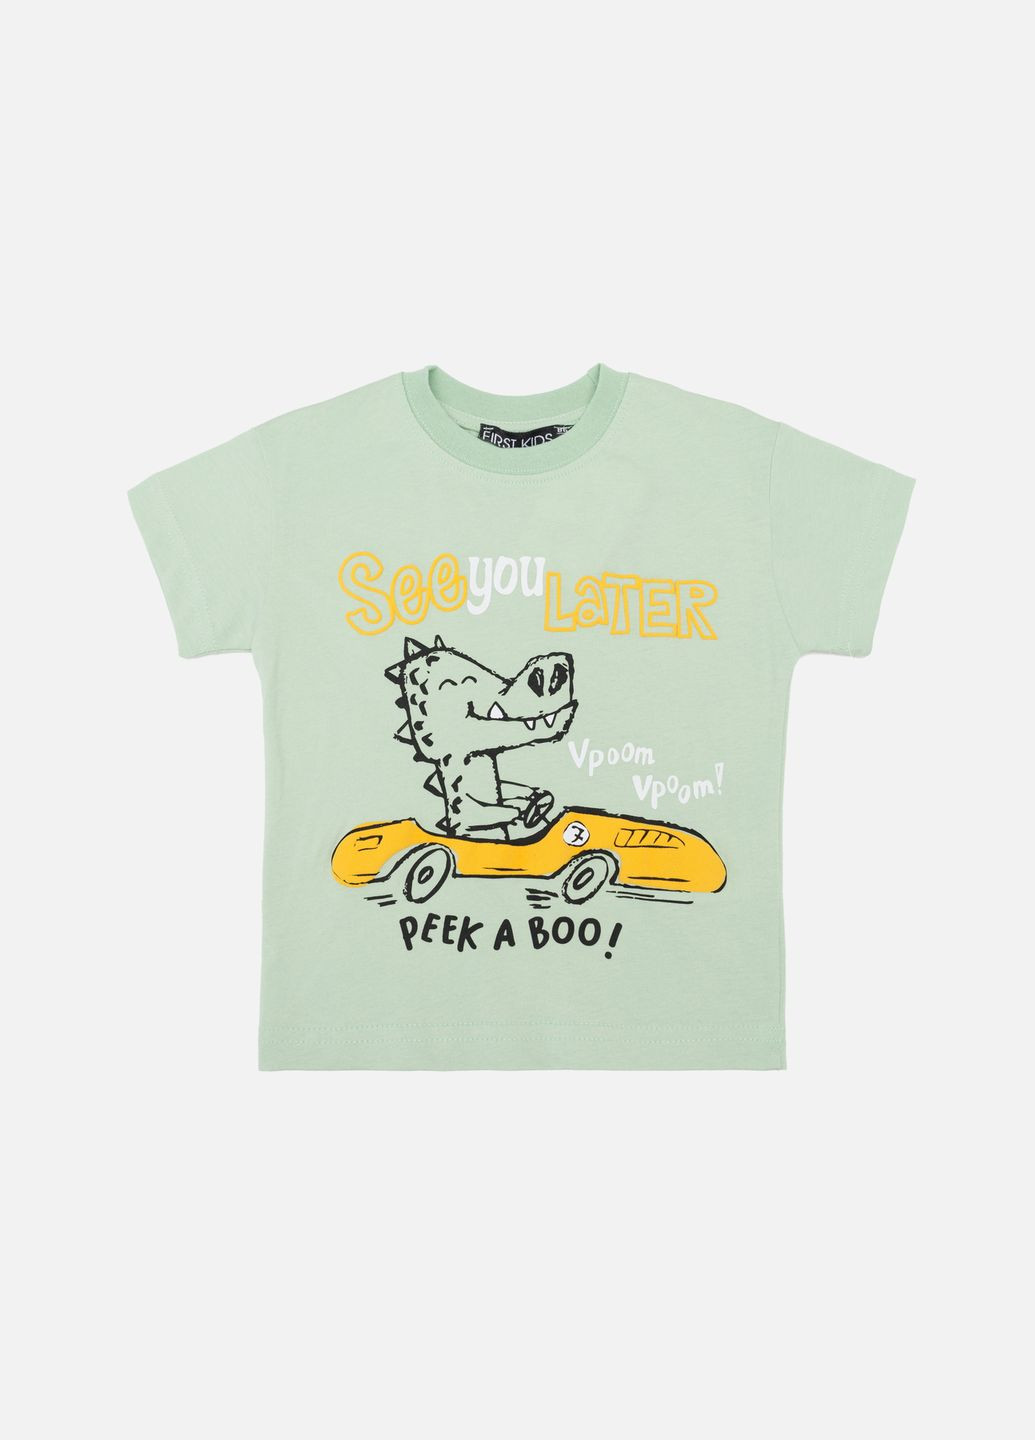 Оливковая летняя футболка с коротким рукавом для мальчика цвет оливковый цб-00246545 First Kids